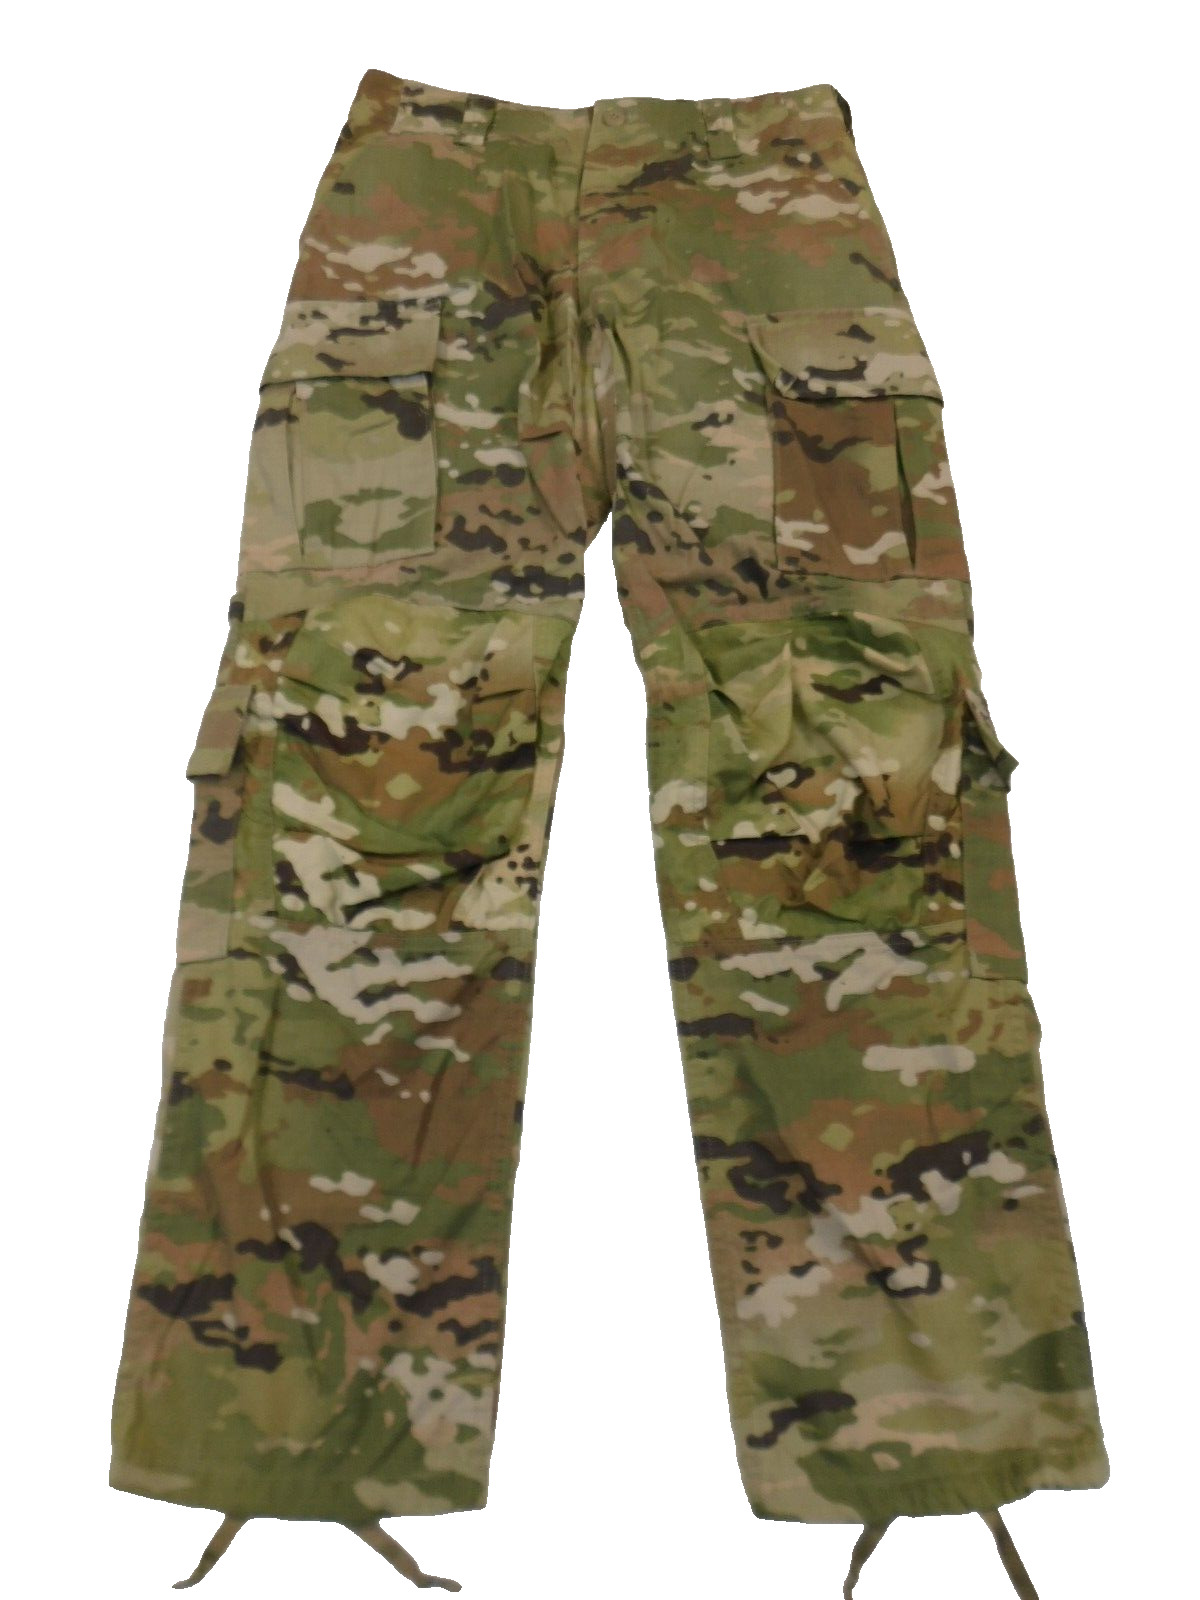 US Army Improved Hot Weather Combat Pants Medium Regular Multicam OCP Camo IHWCU